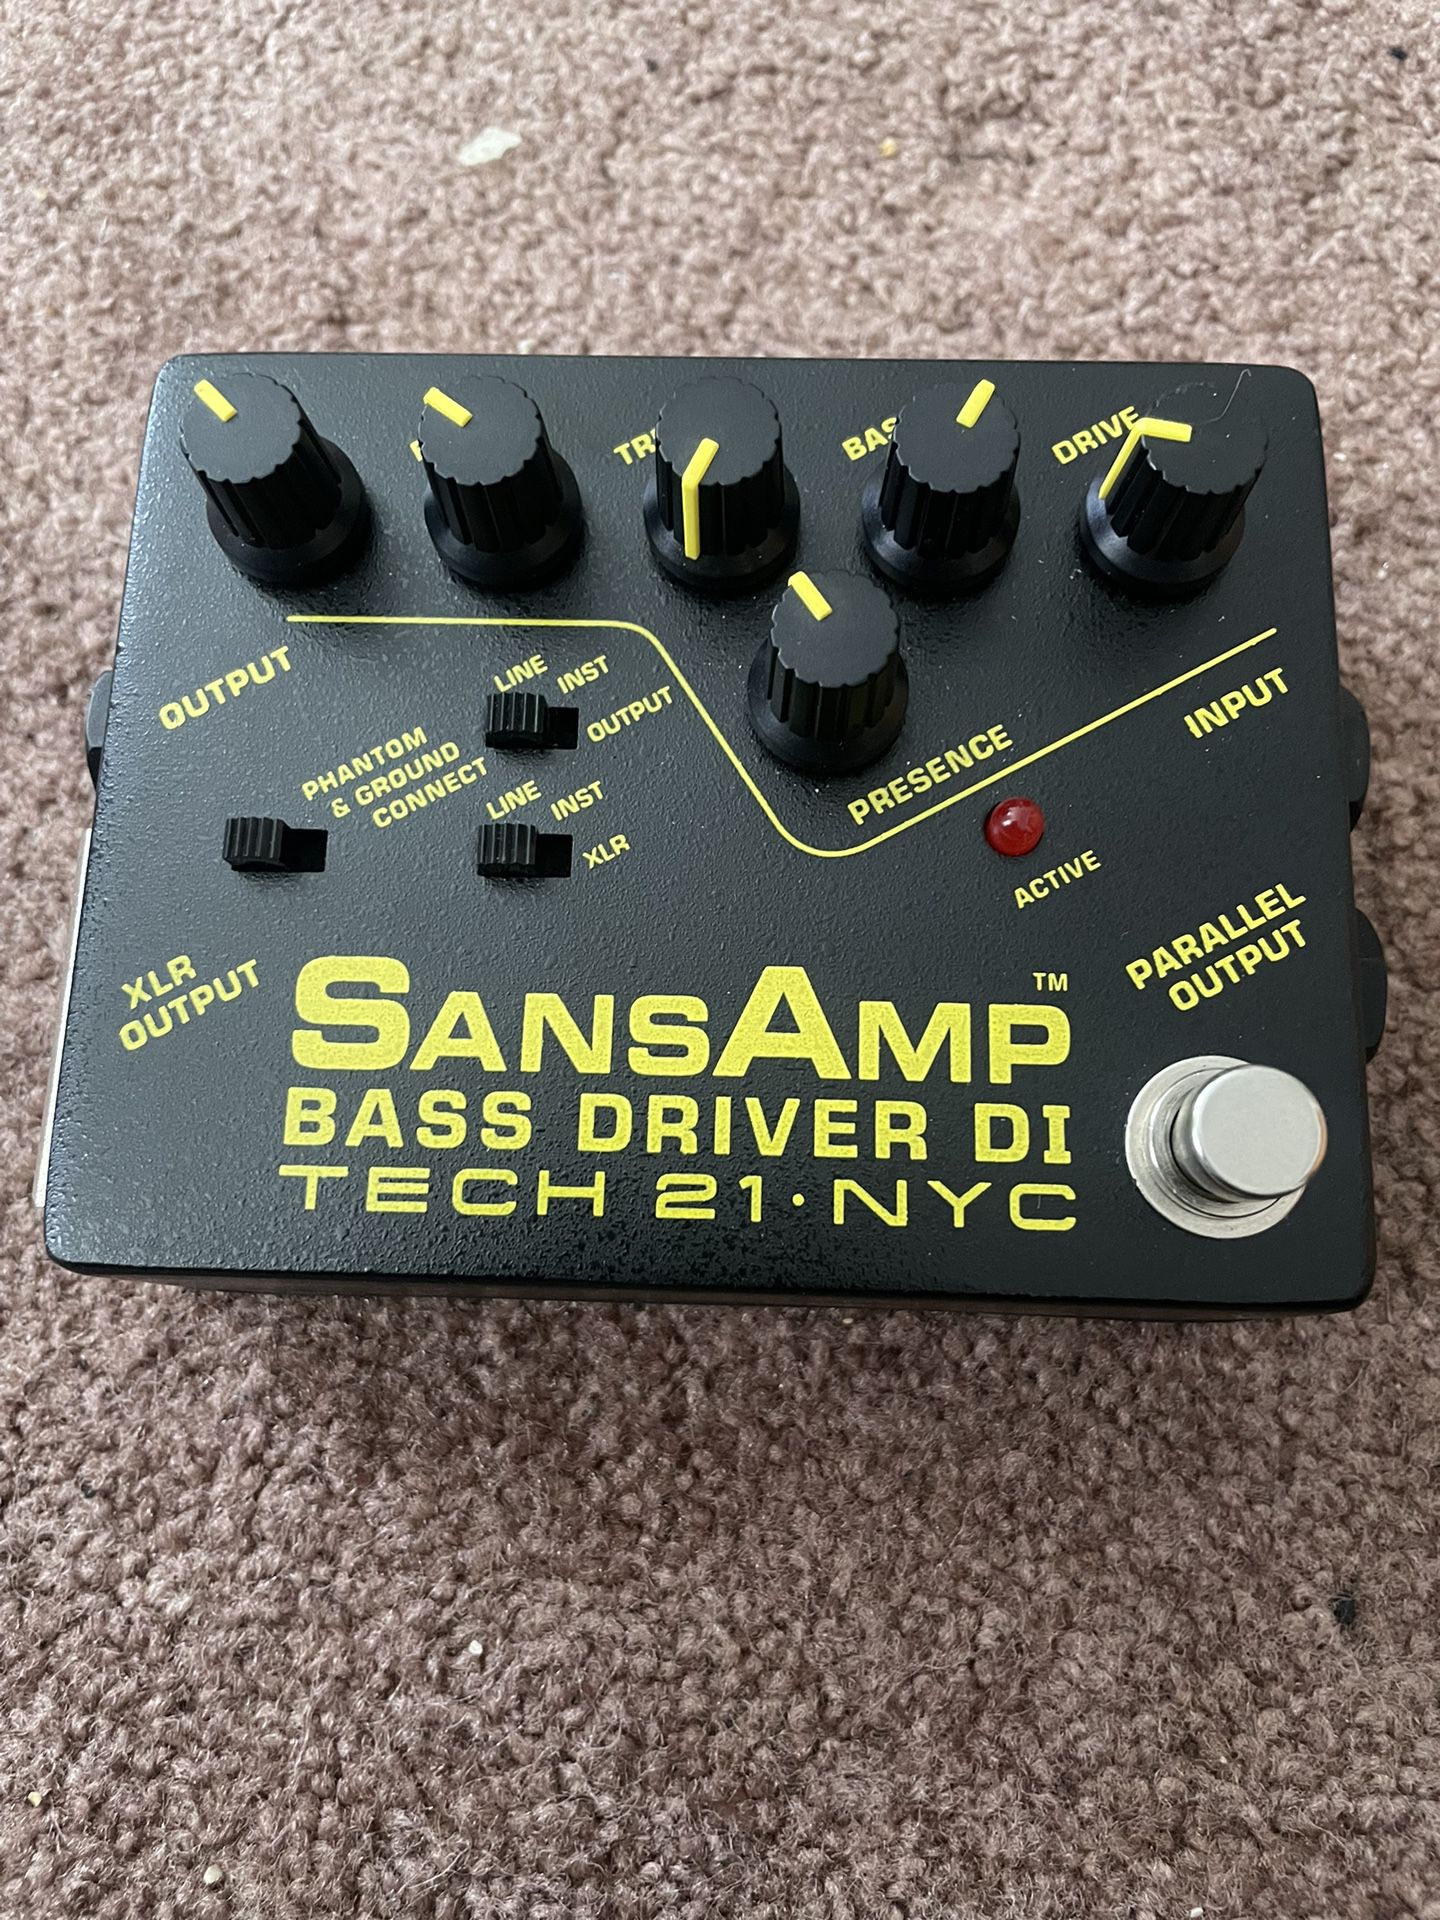 Sans amp bass driver DI tech 21 NYC